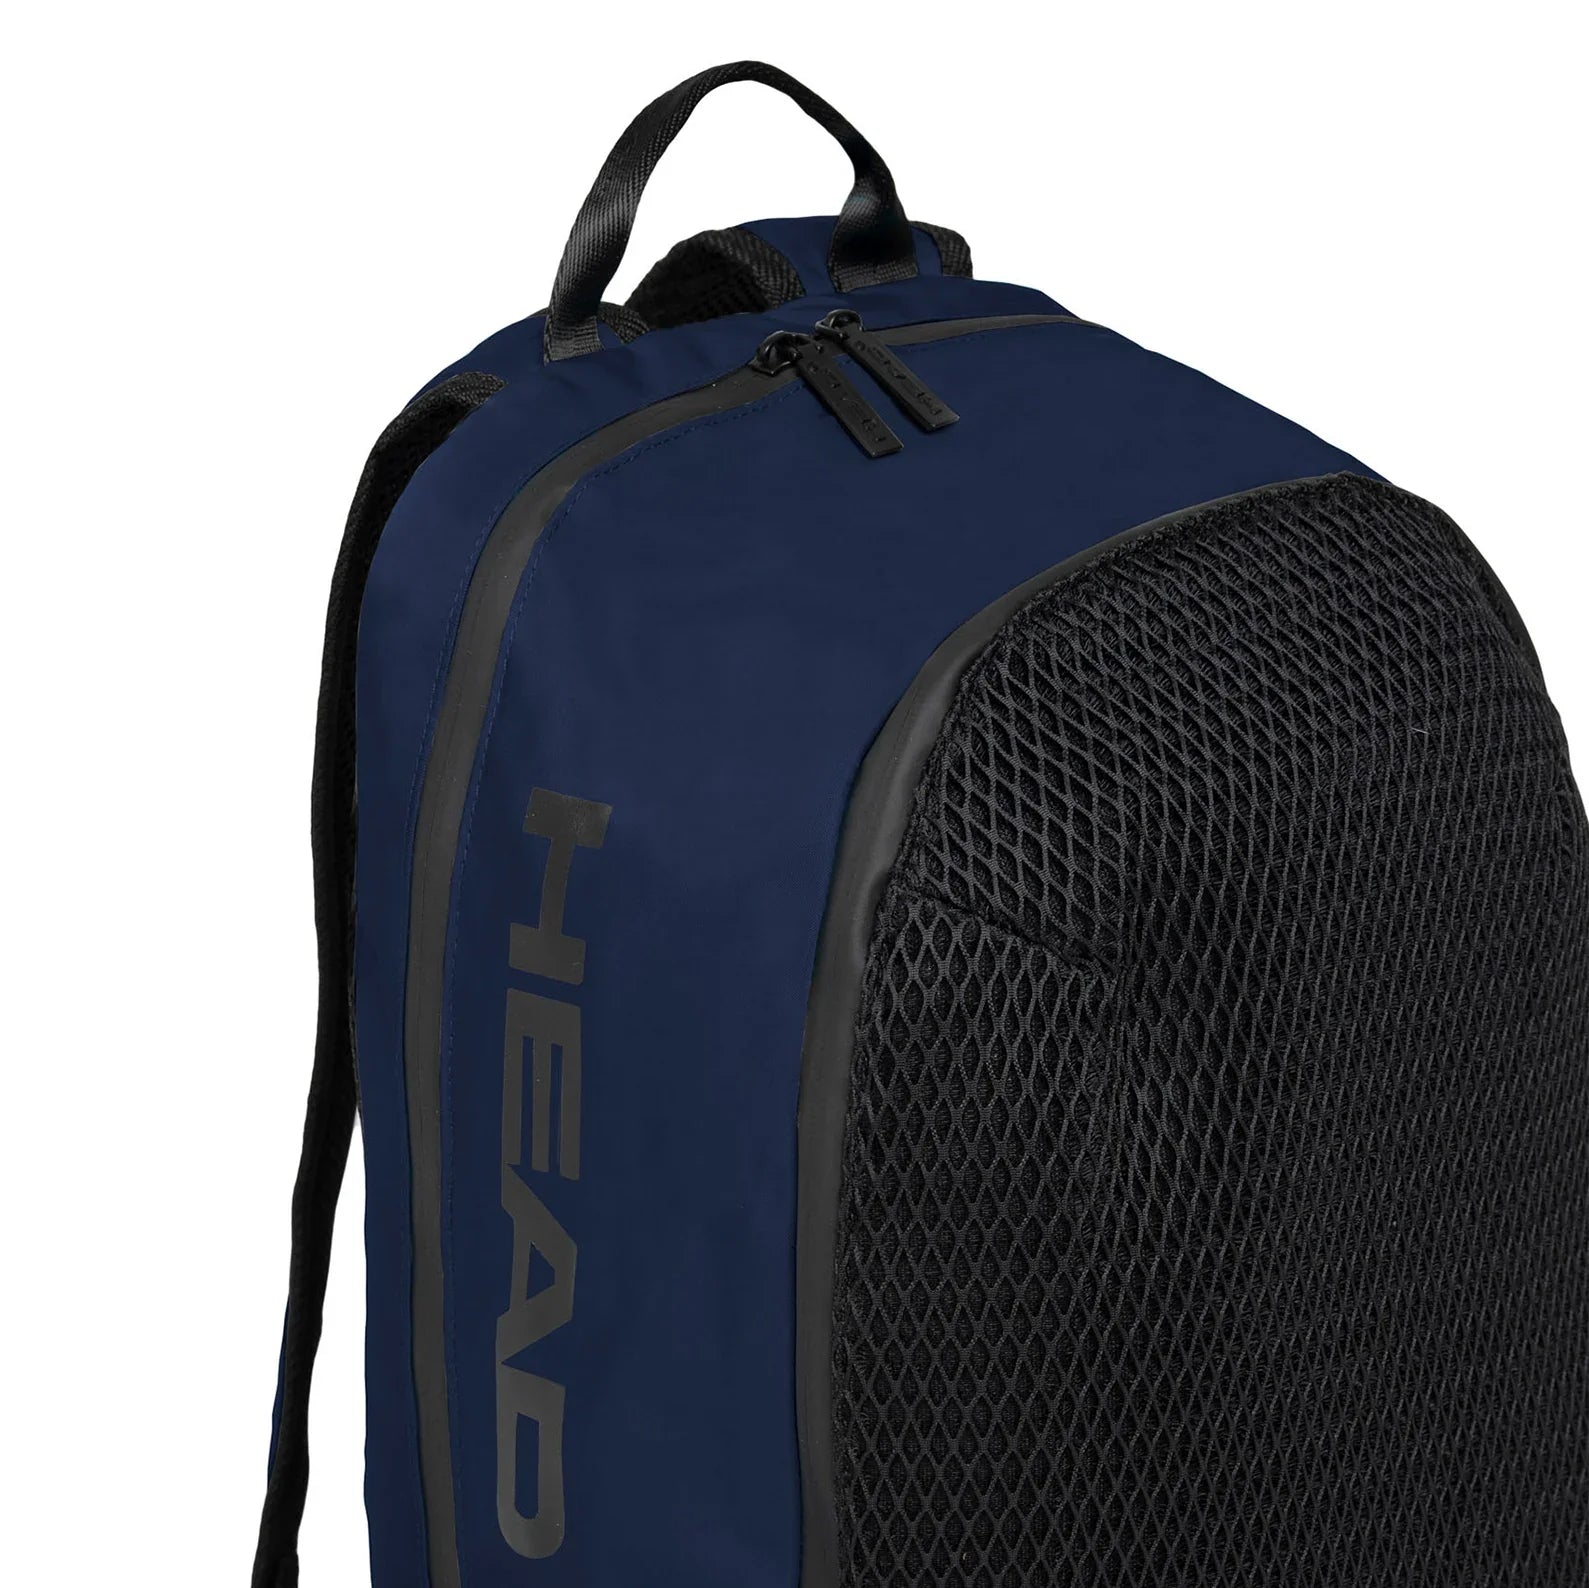 Head Net Backpack 47 cm - black